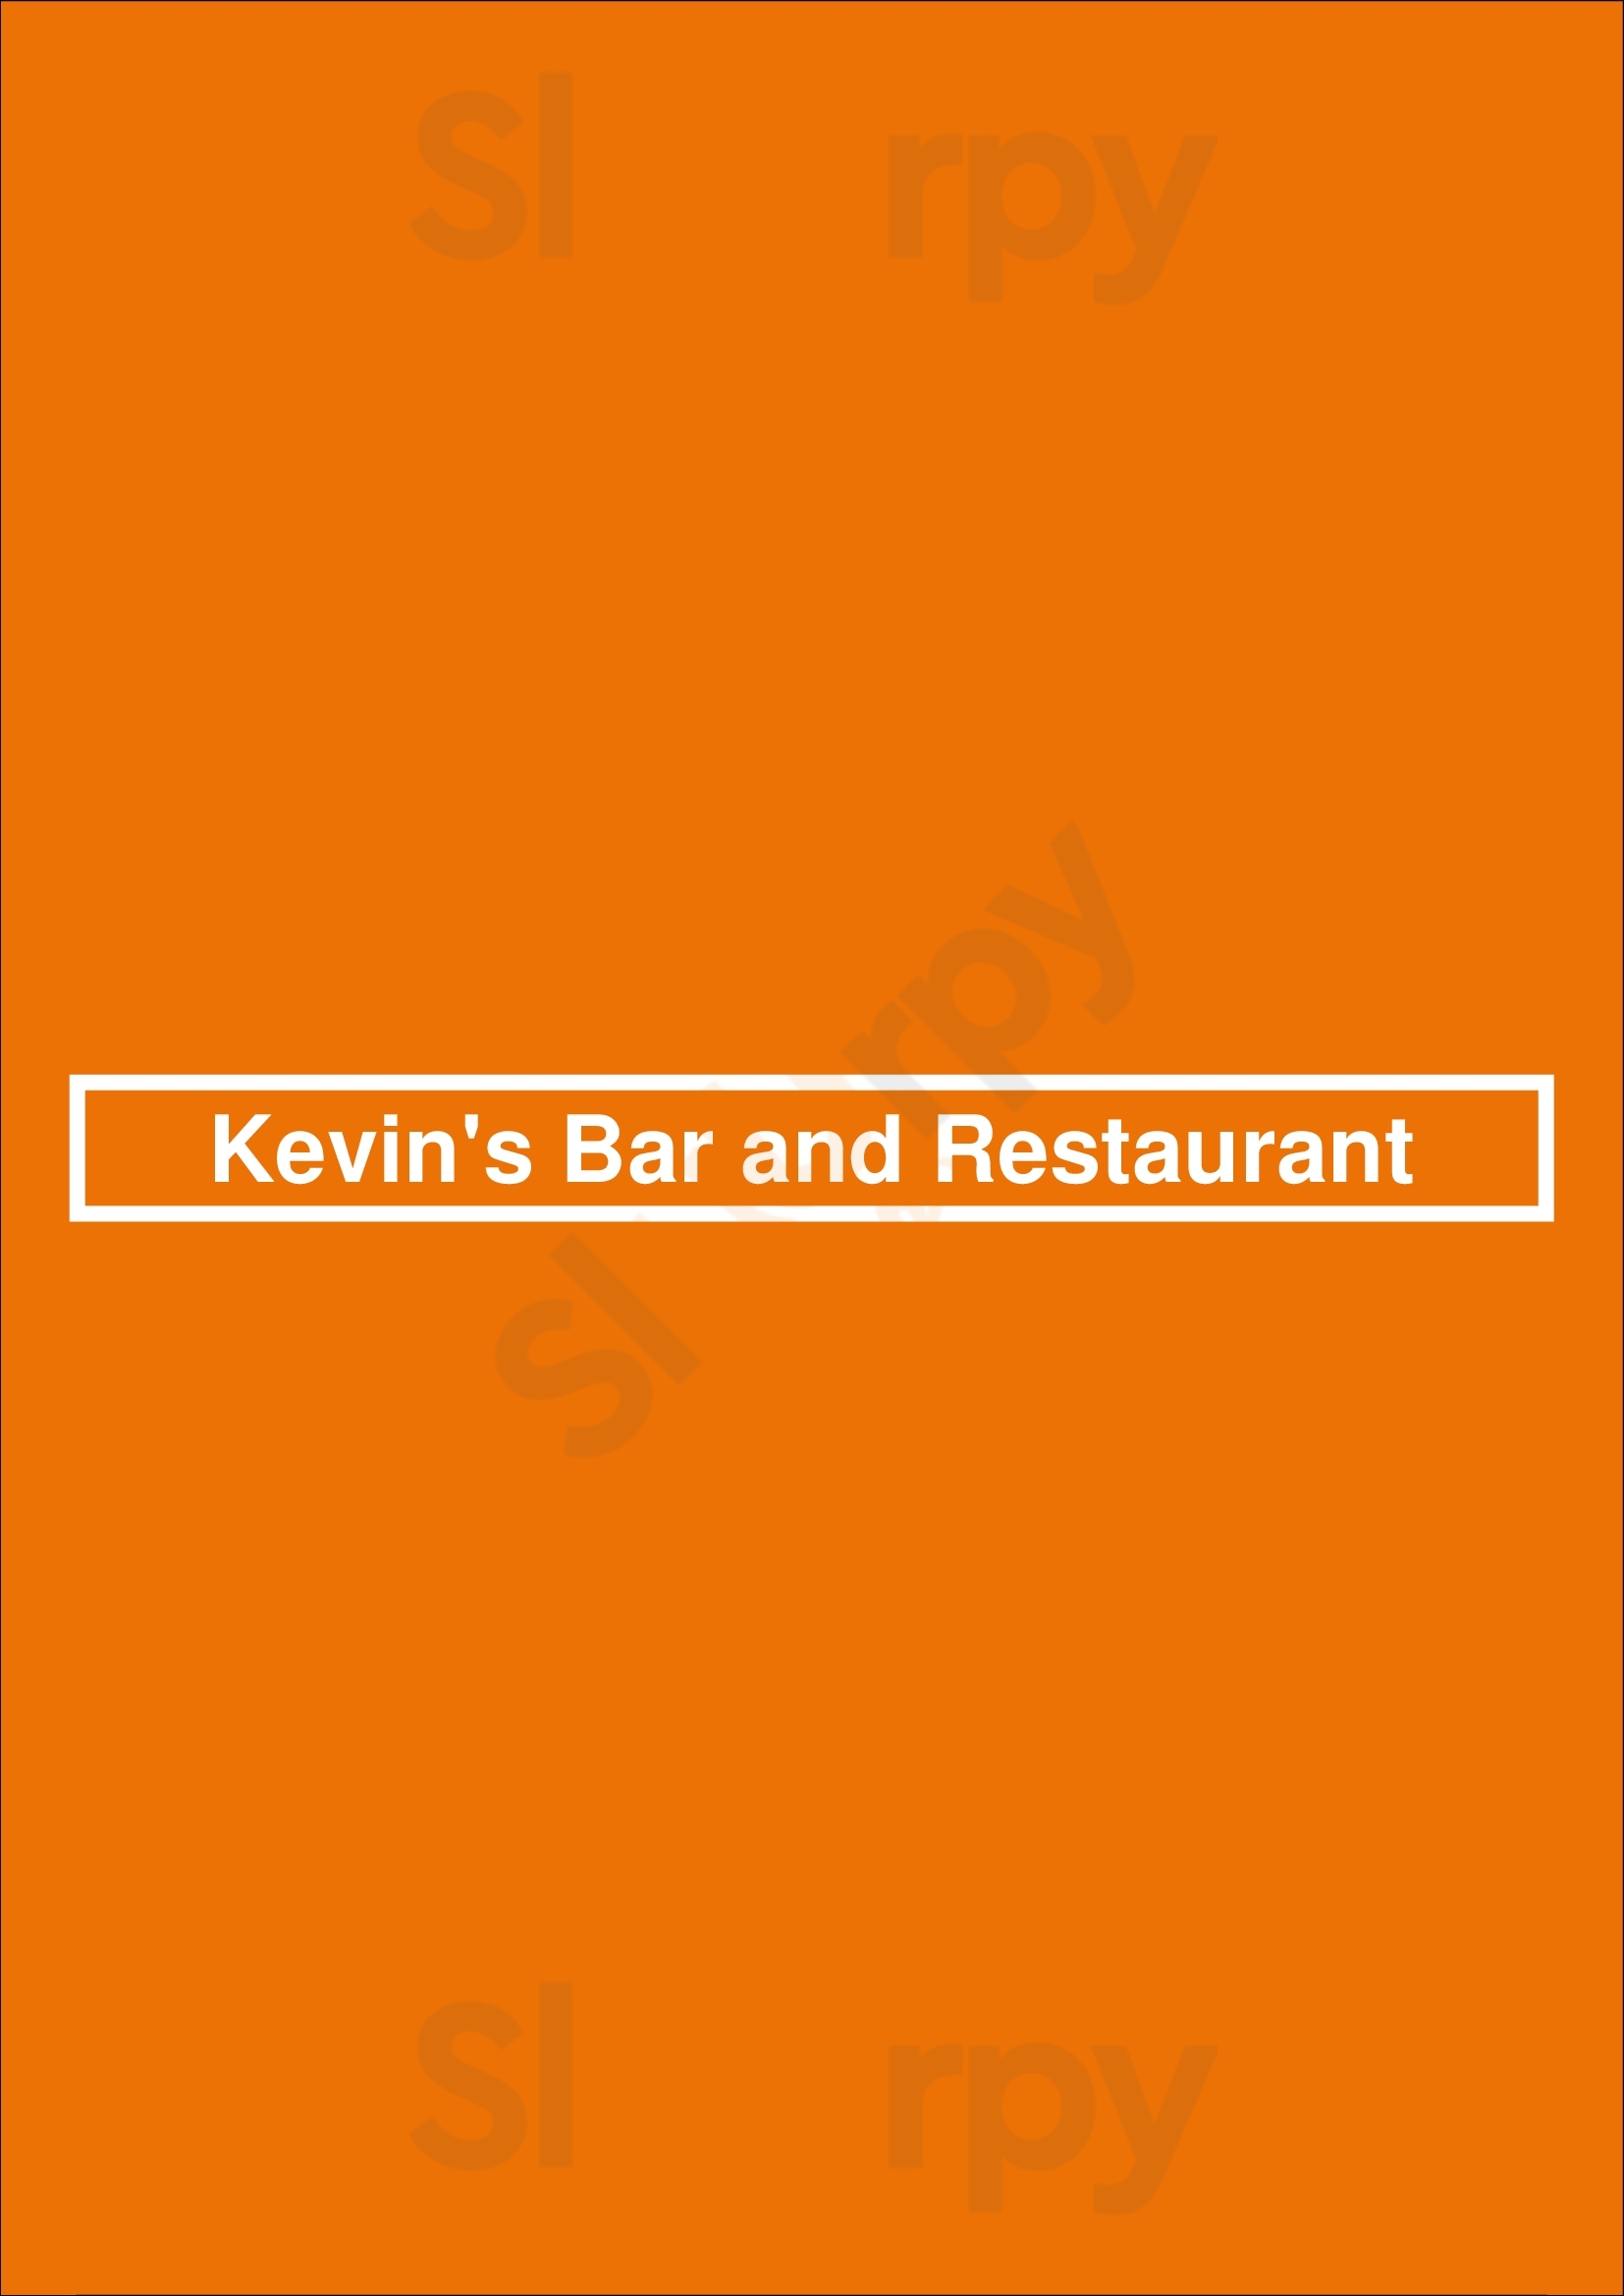 Kevin's Bar And Restaurant Kingston Menu - 1